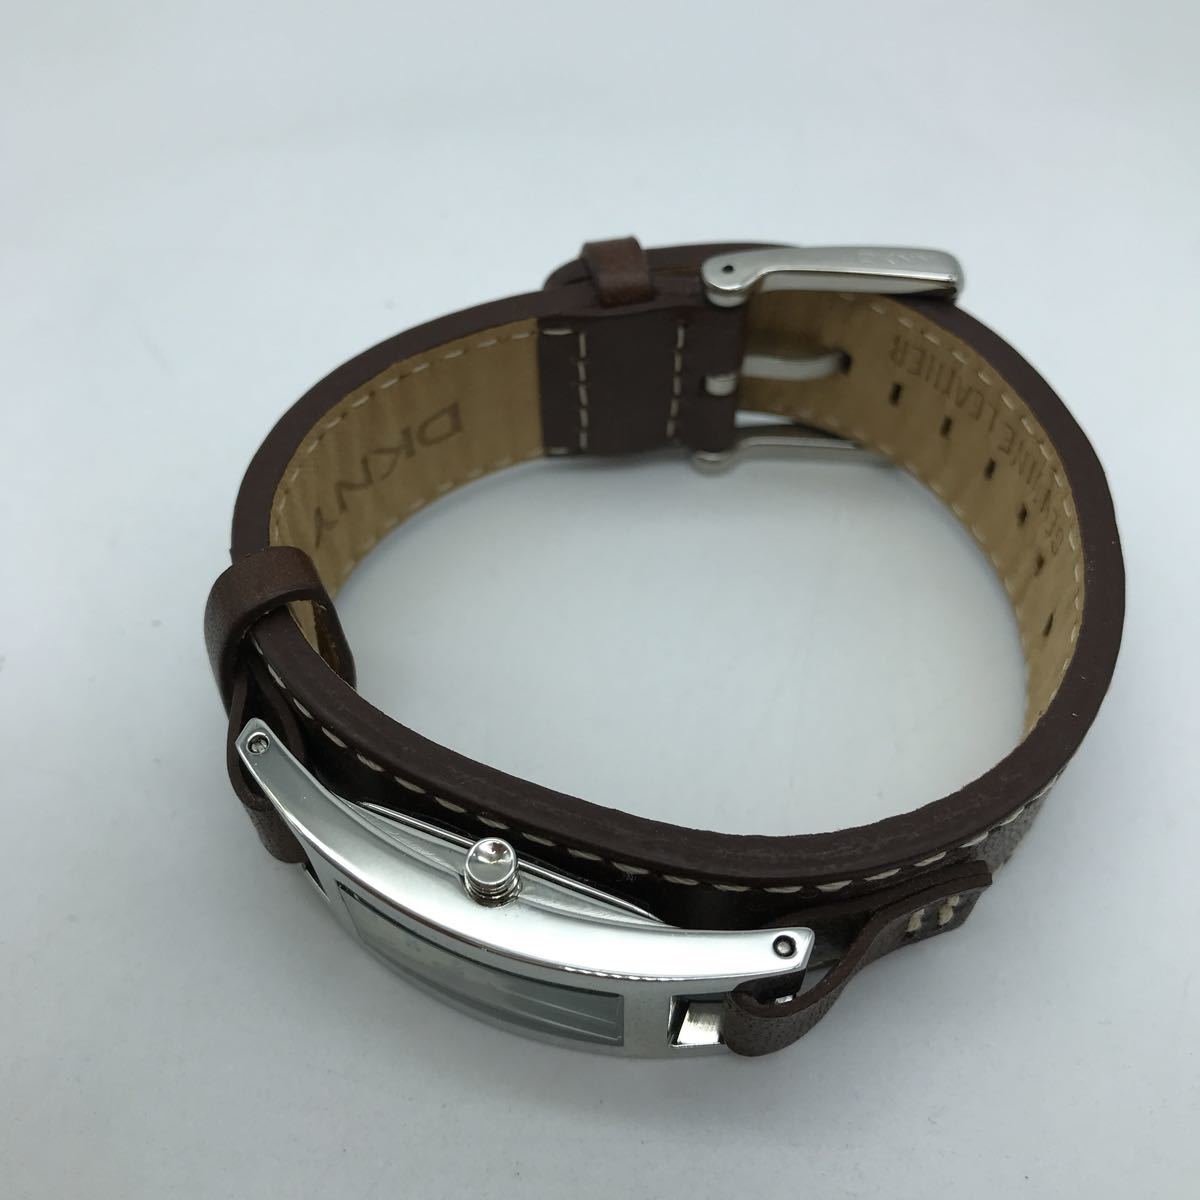 DKNY DKNY наручные часы кварц кожаный ремень женский рабочий товар 